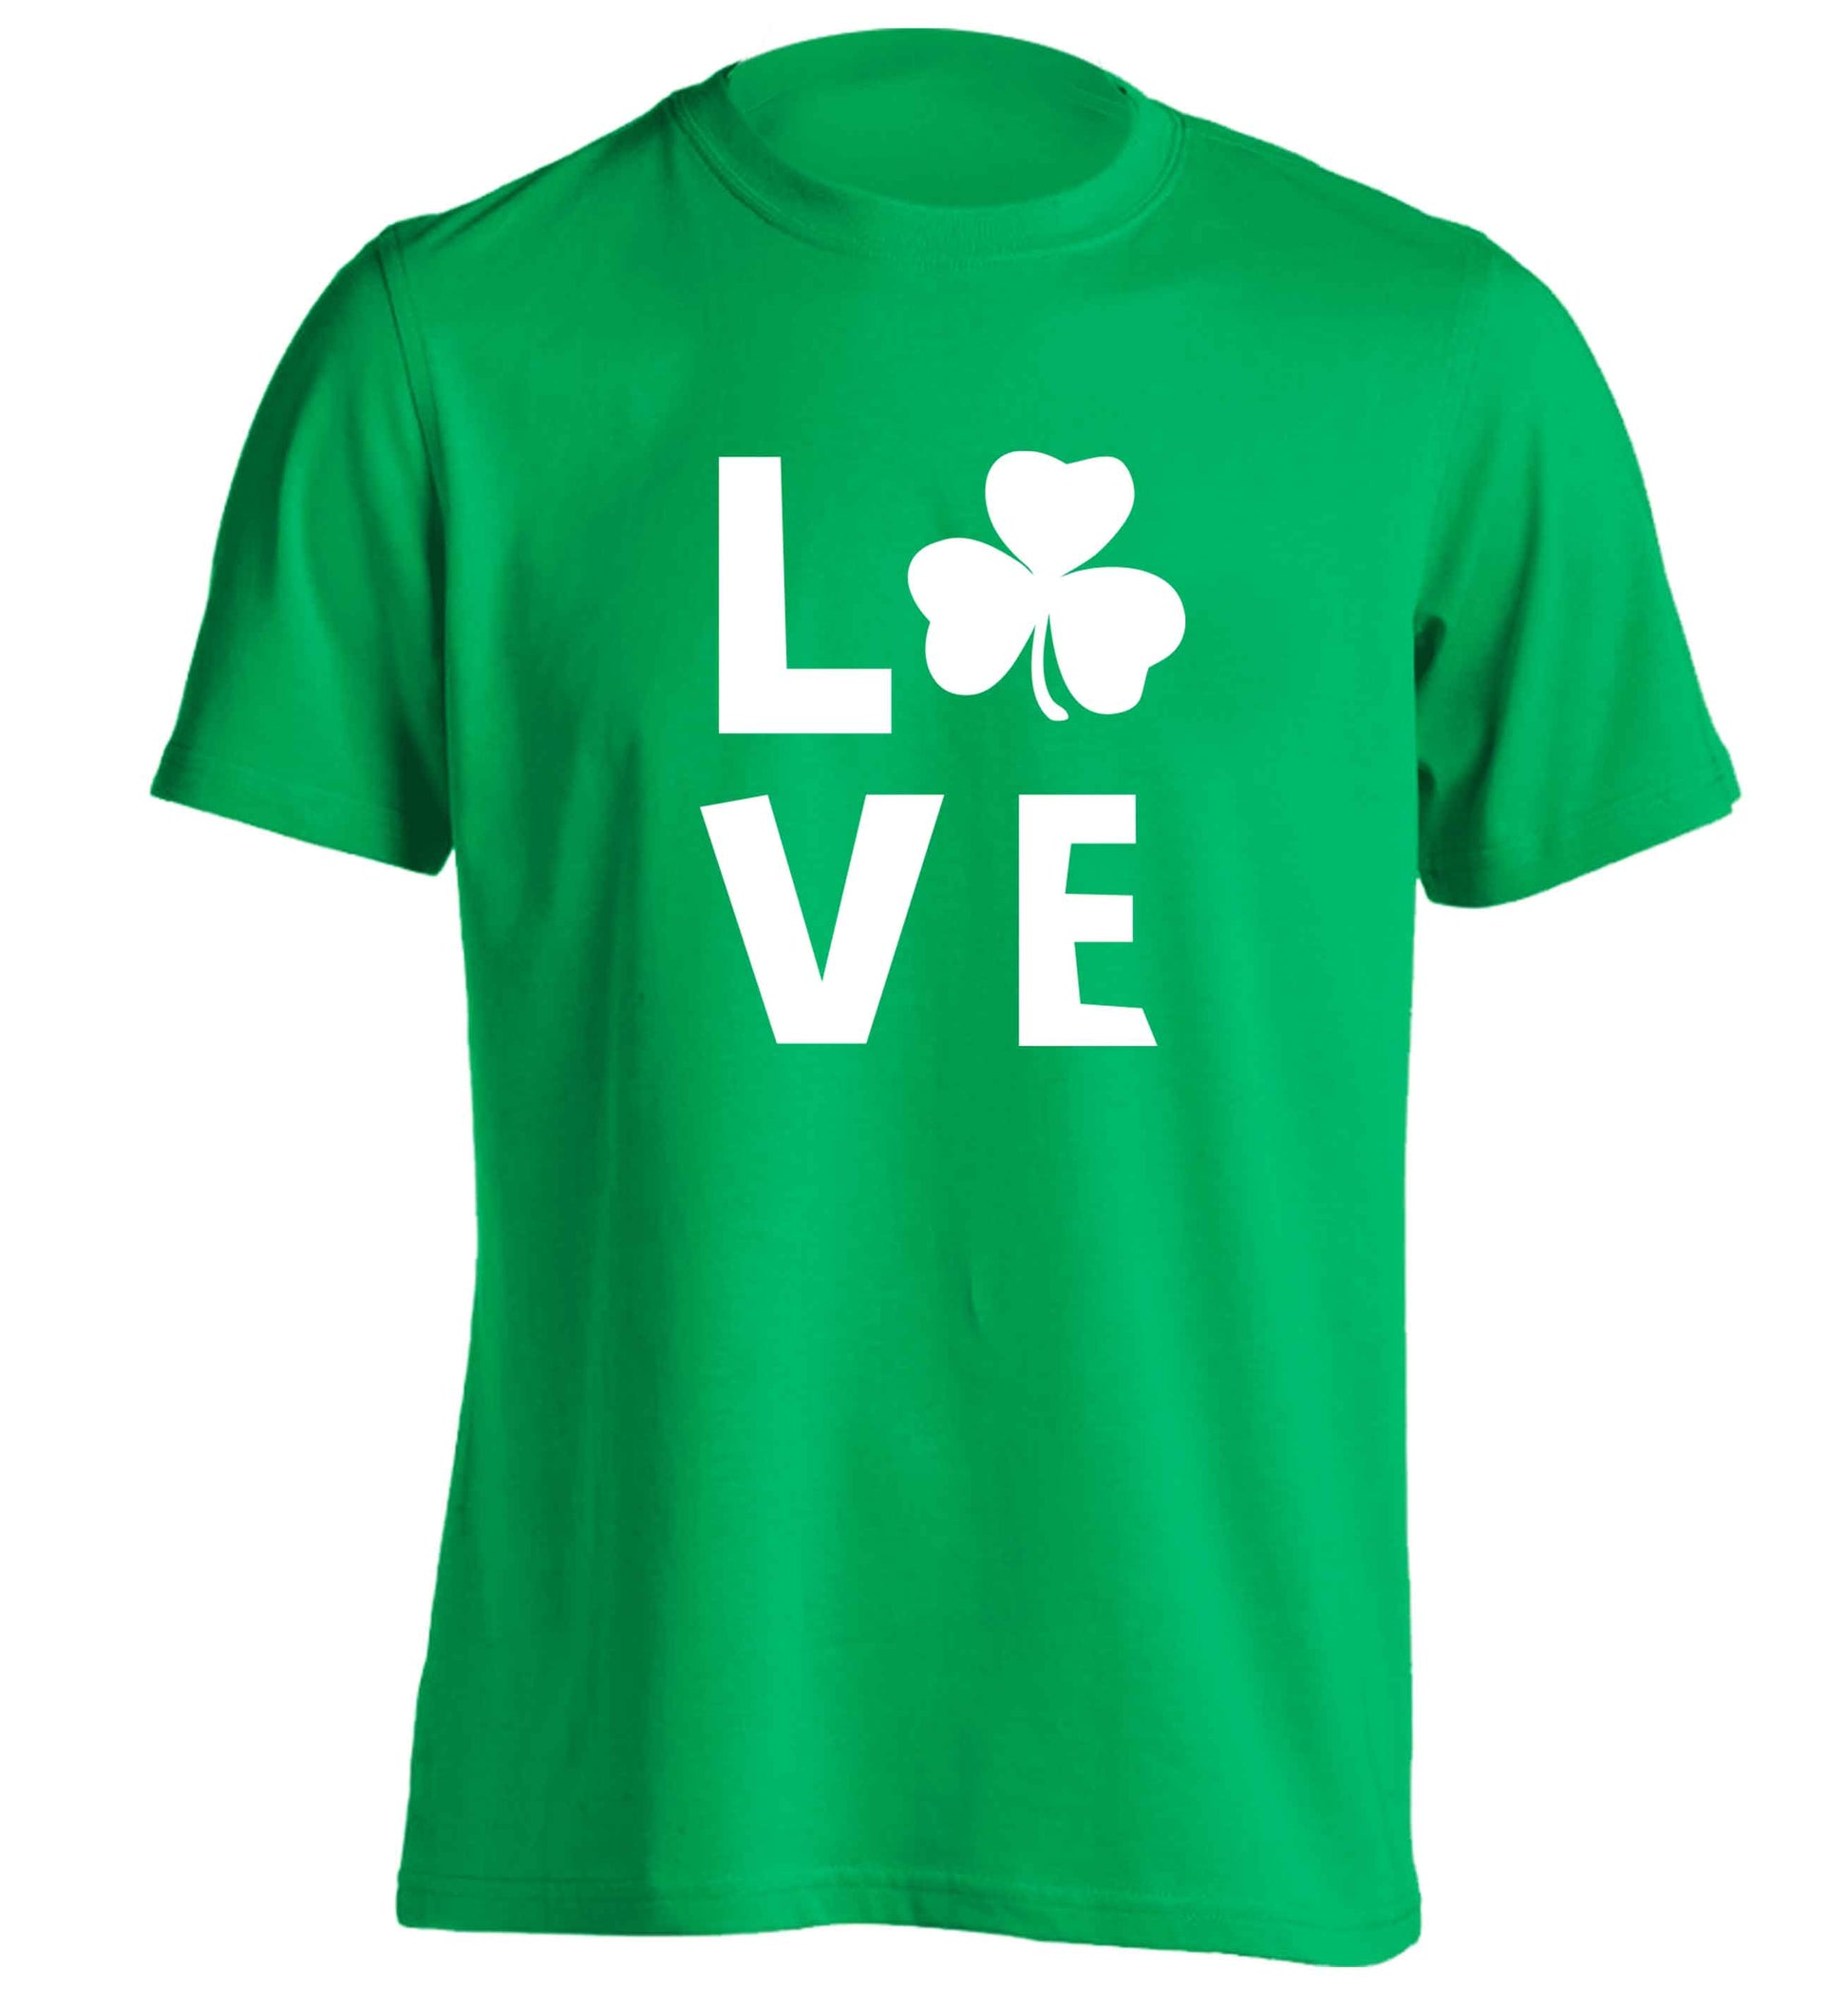 Shamrock love adults unisex green Tshirt 2XL